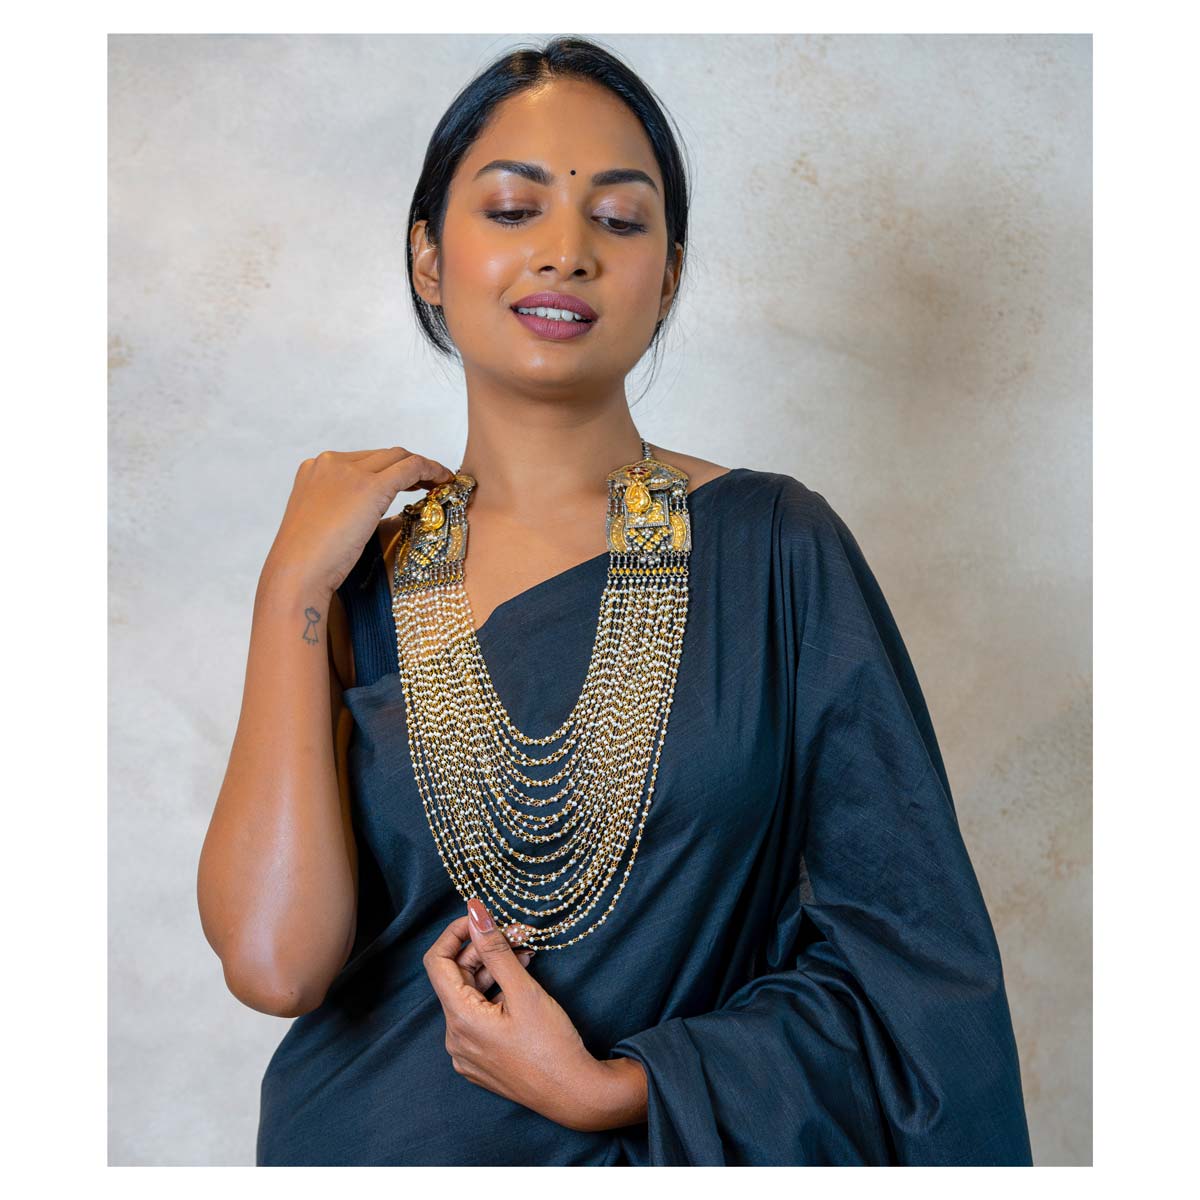 Black thread necklace kemp stone with lakshmi pendant and golden beads –  Cherrypick